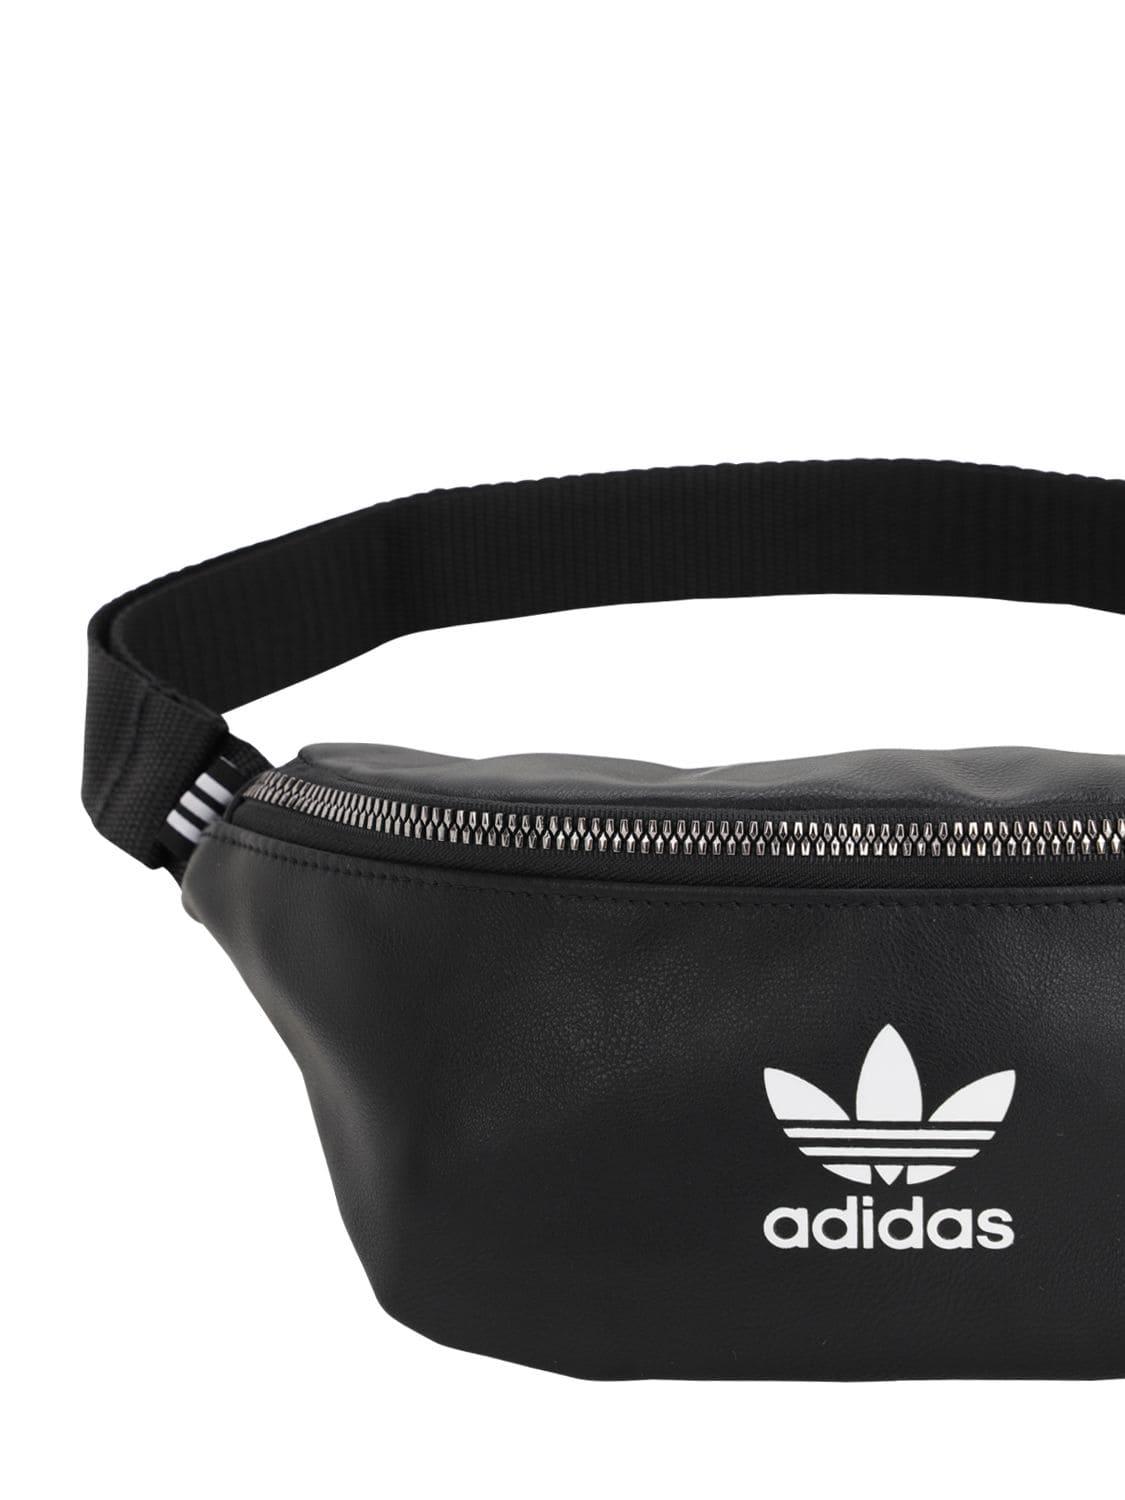 adidas Originals Faux Leather Belt Bag in Black | Lyst Canada